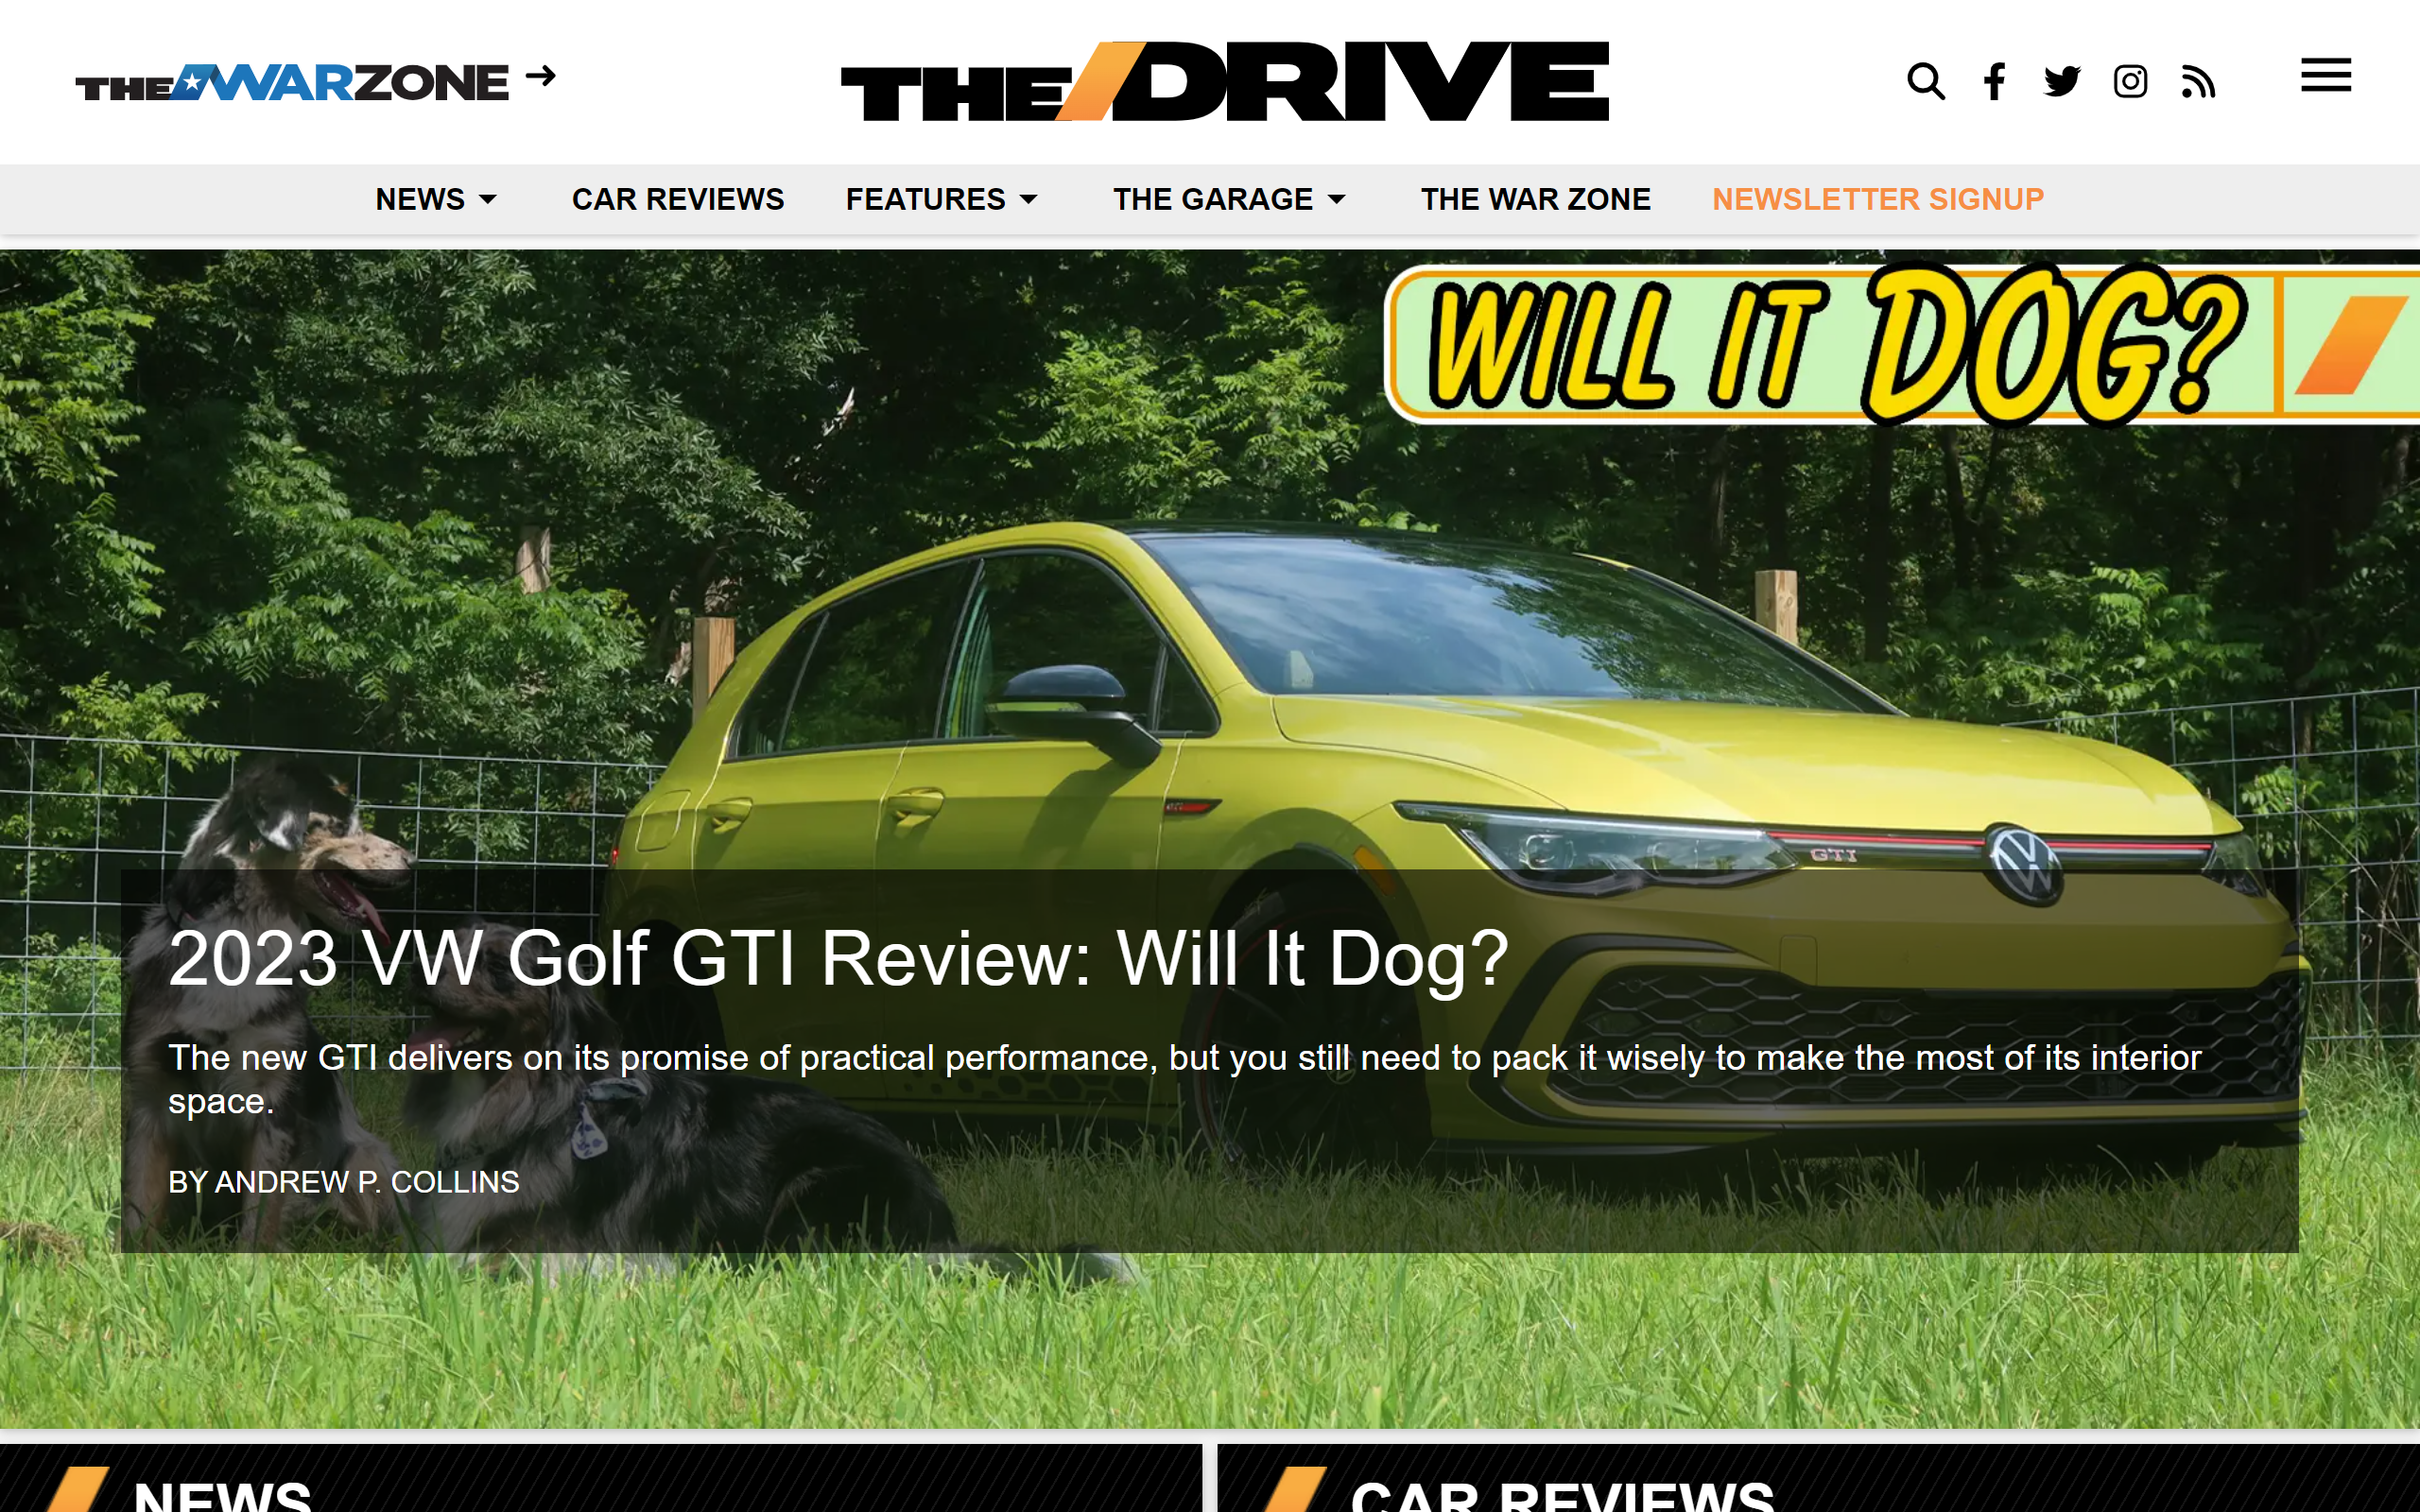 The Drive car blog